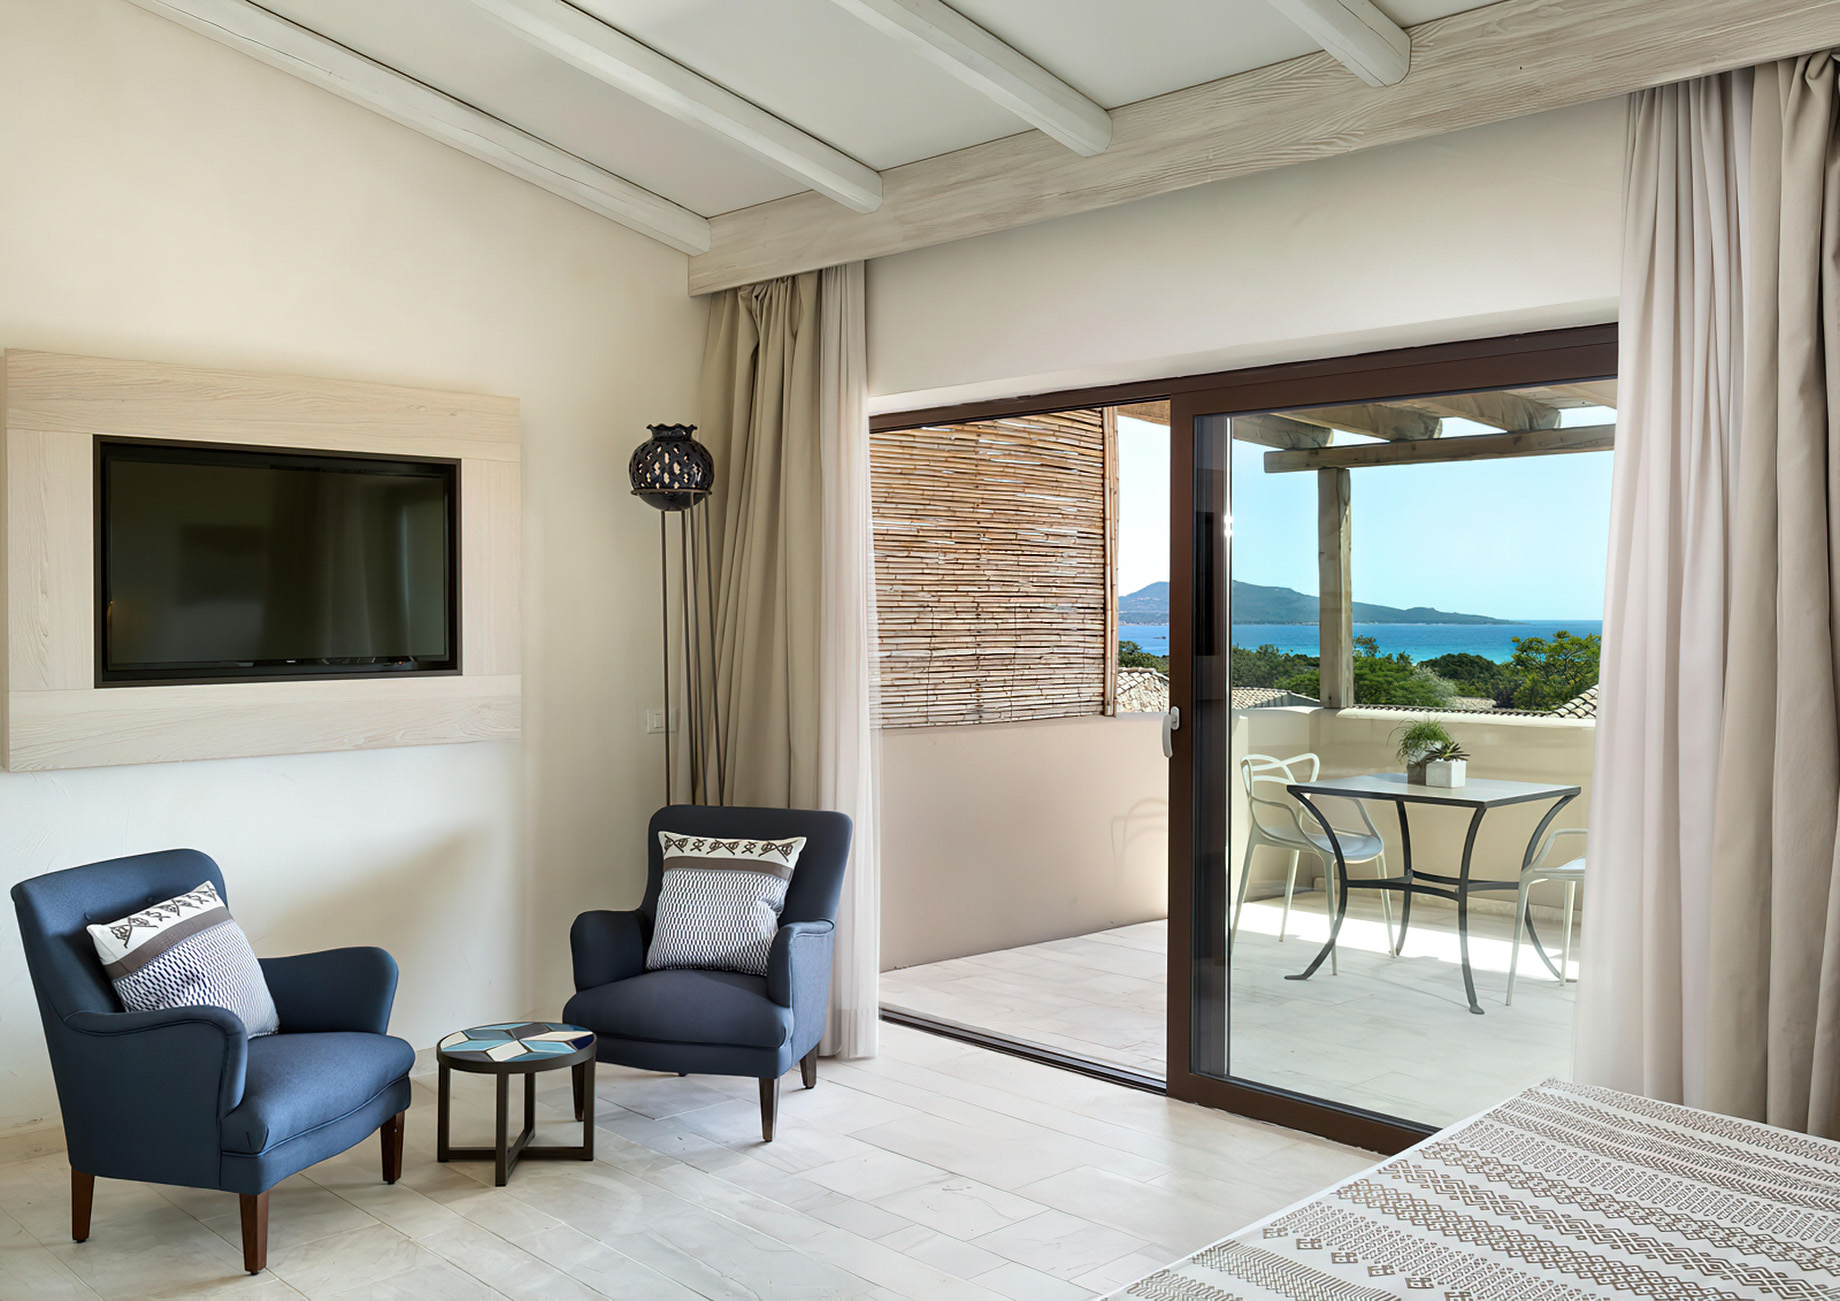 Baglioni Resort Sardinia - San Teodoro, Sardegna, Italy - Junior Suite Sea View Sitting Area